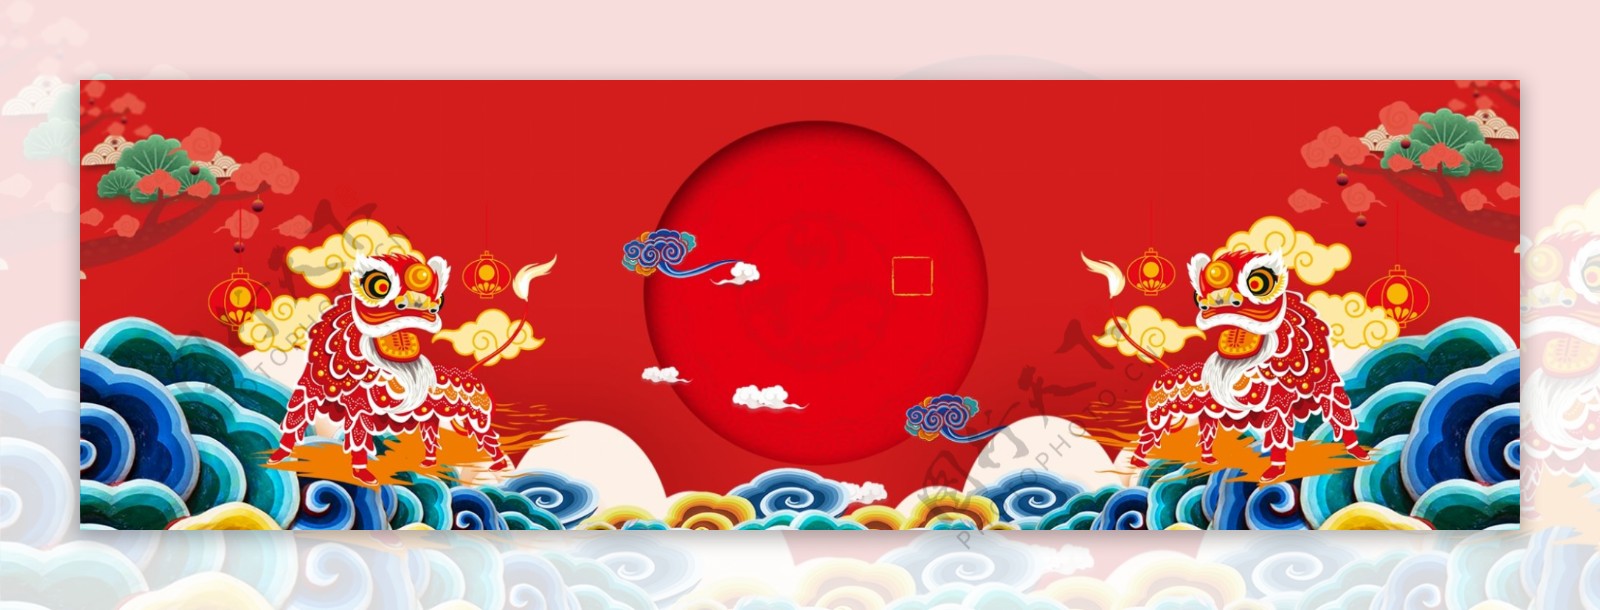 新春元旦春节中国年banner背景